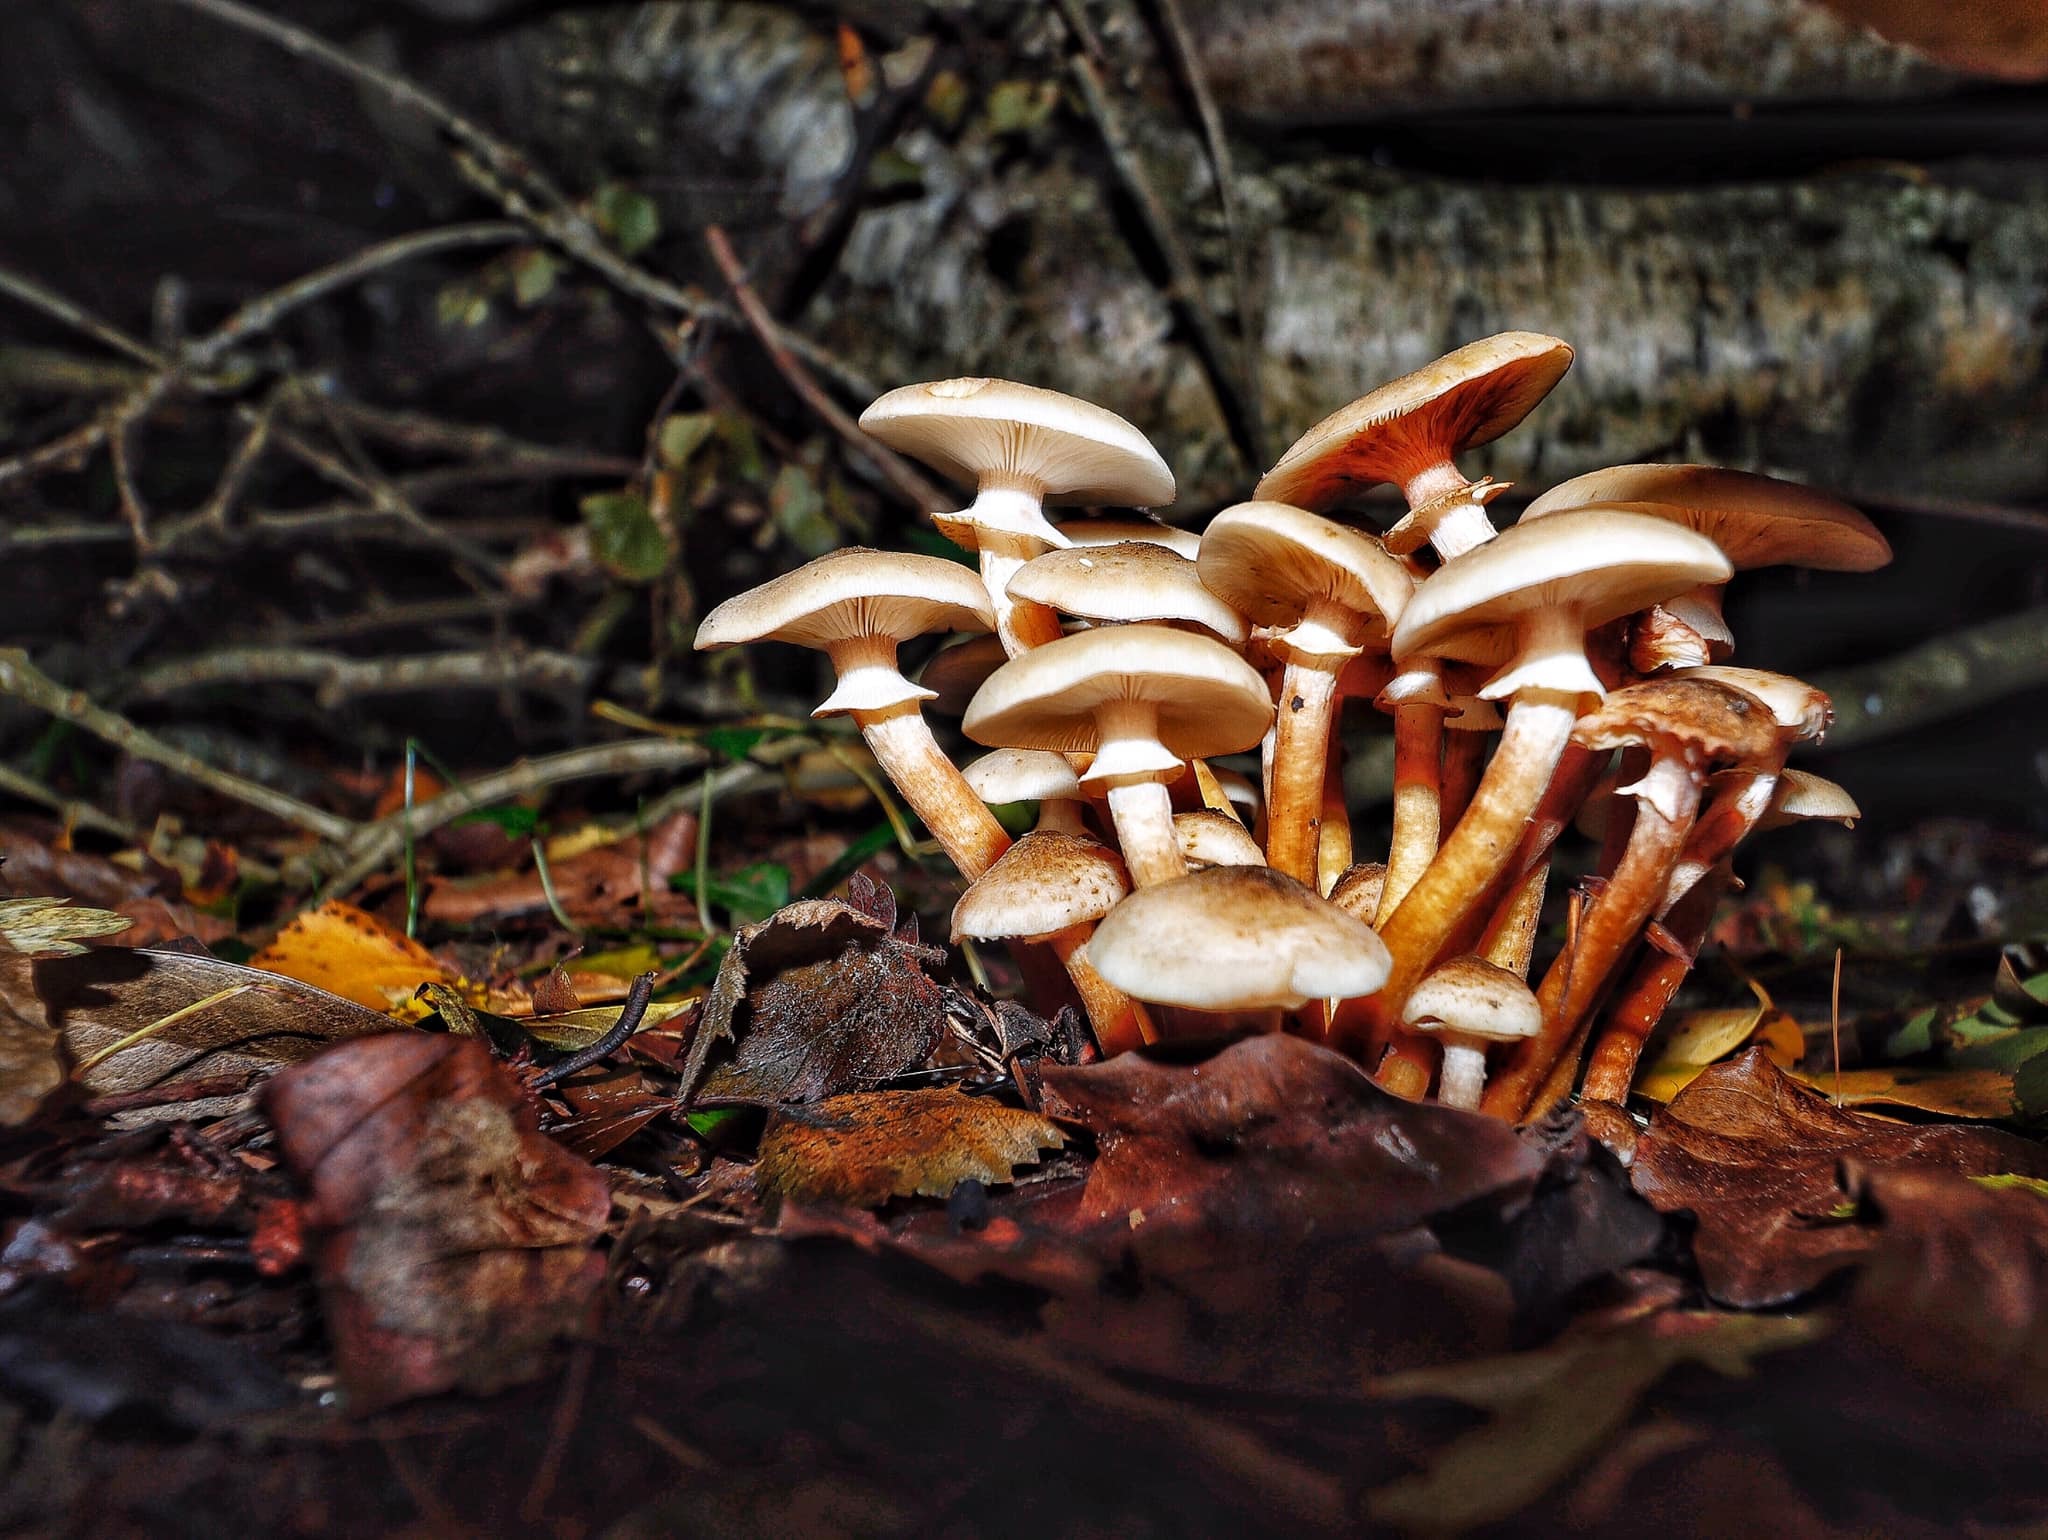 Autumn fungi by Mark Garner